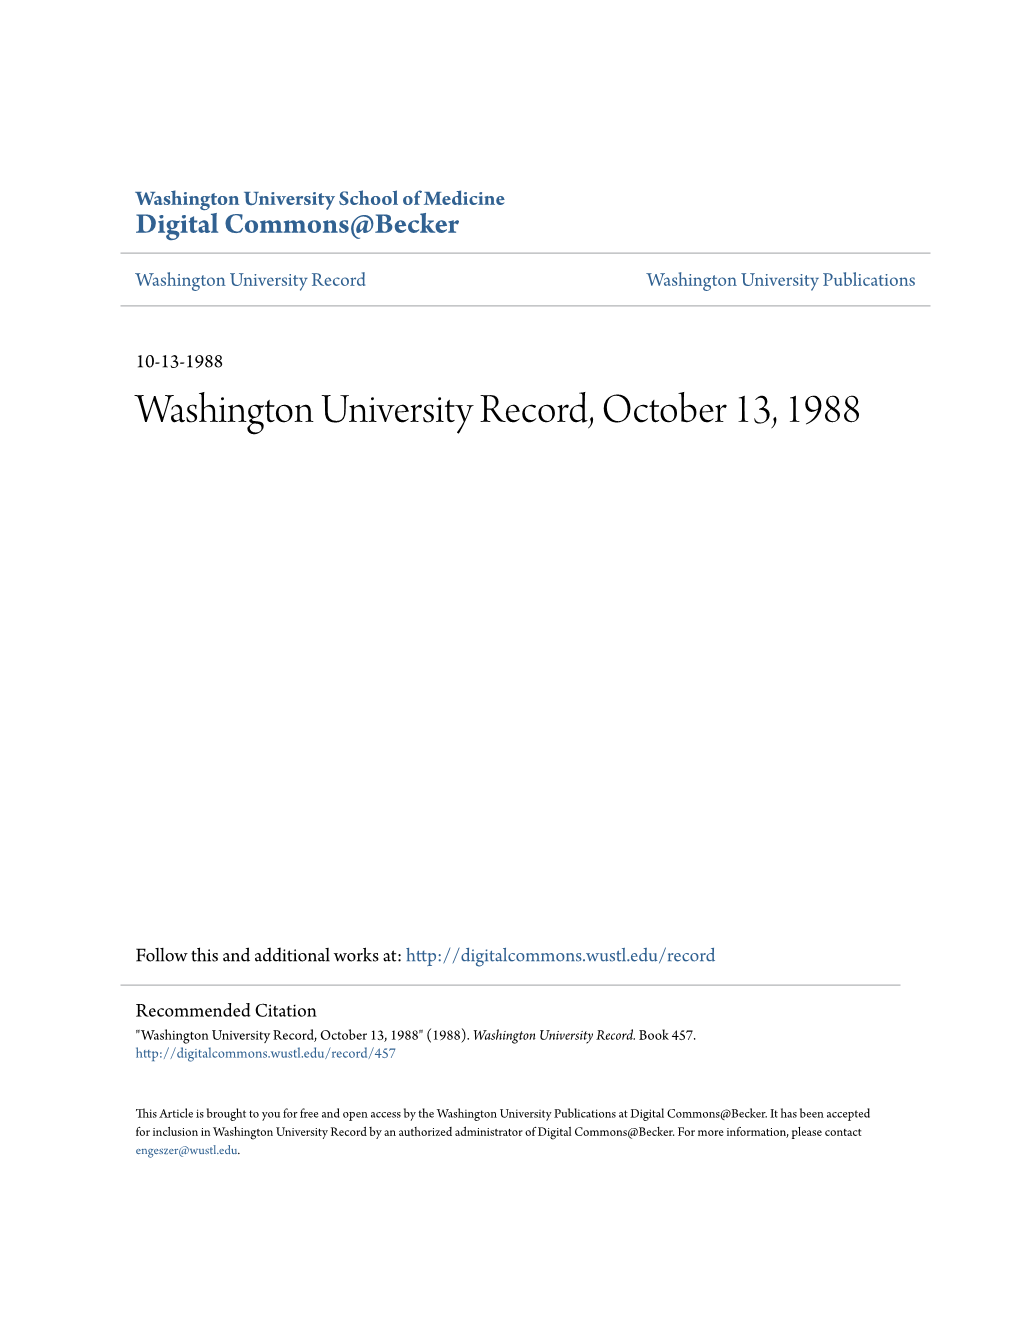 Washington University Record, October 13, 1988